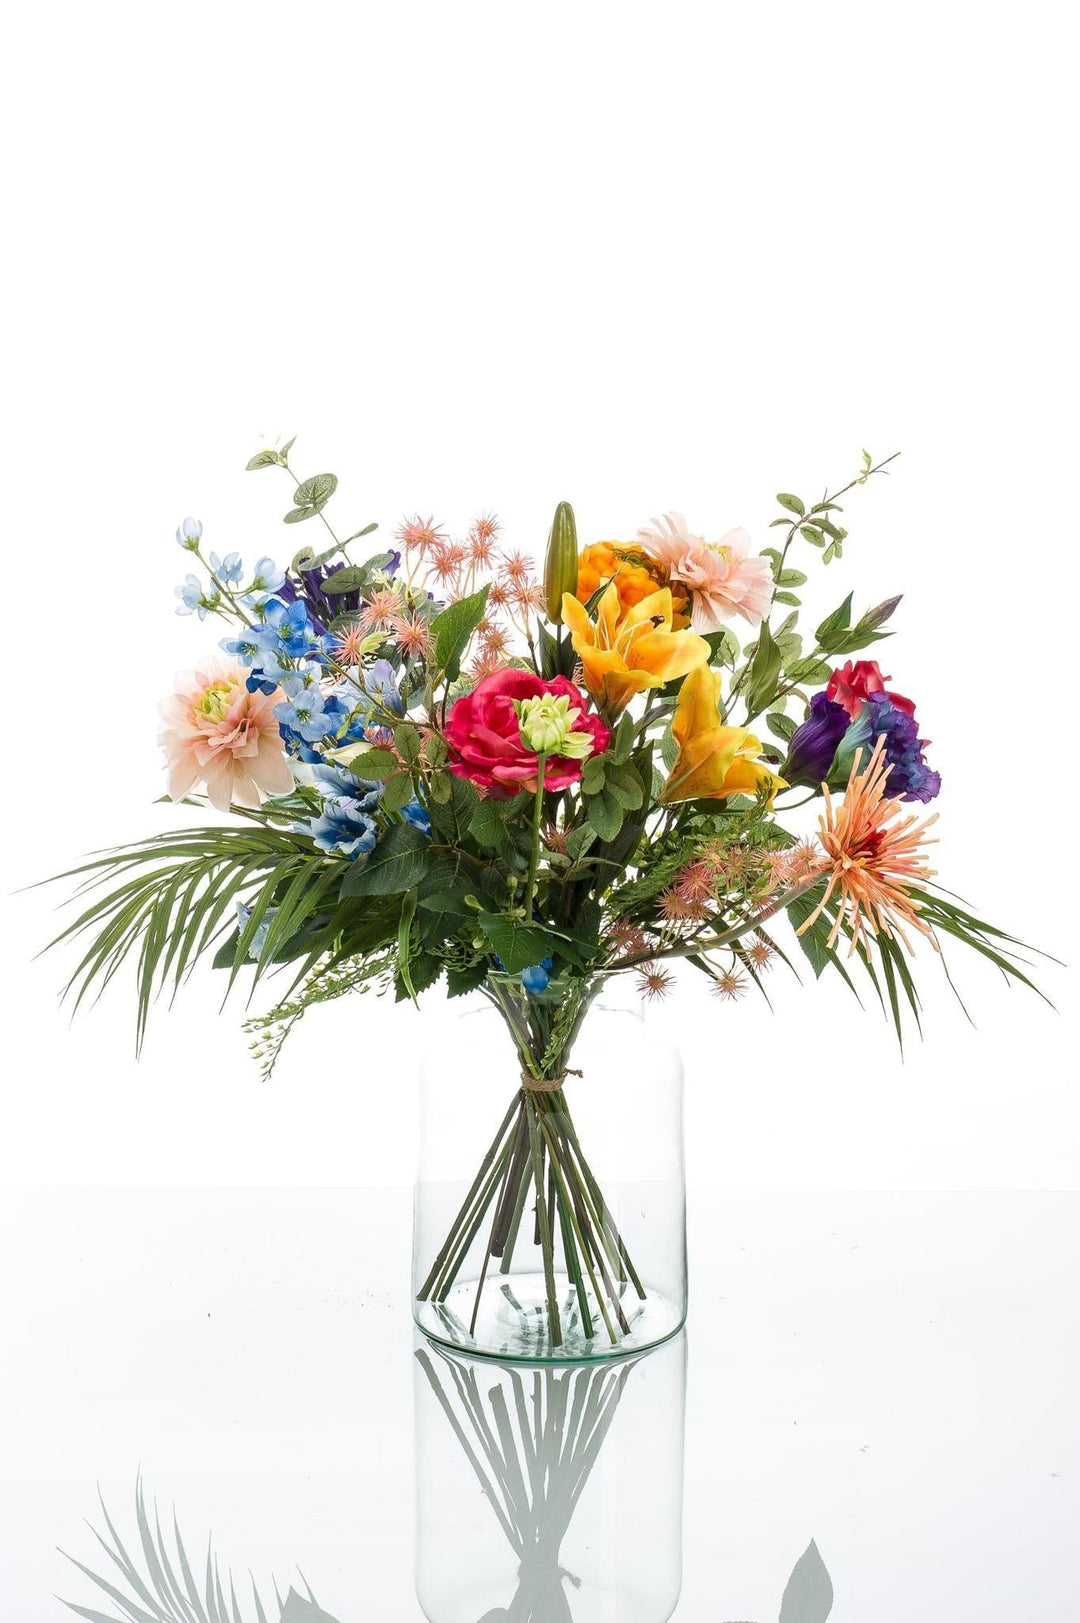 Bouquet Pretty Powerful - 67 cm -Plant-Botanicly